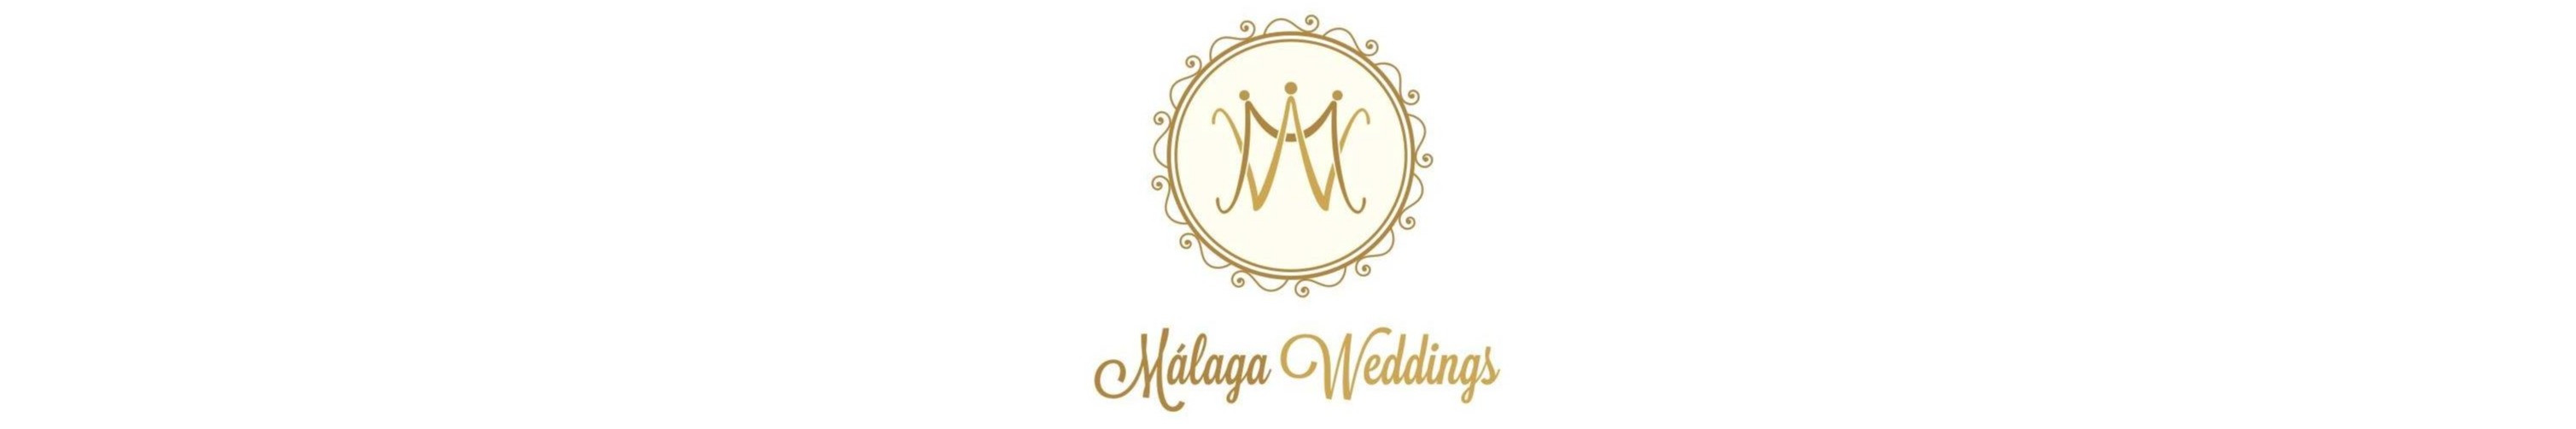 Málaga Weddings - Wedding Planner